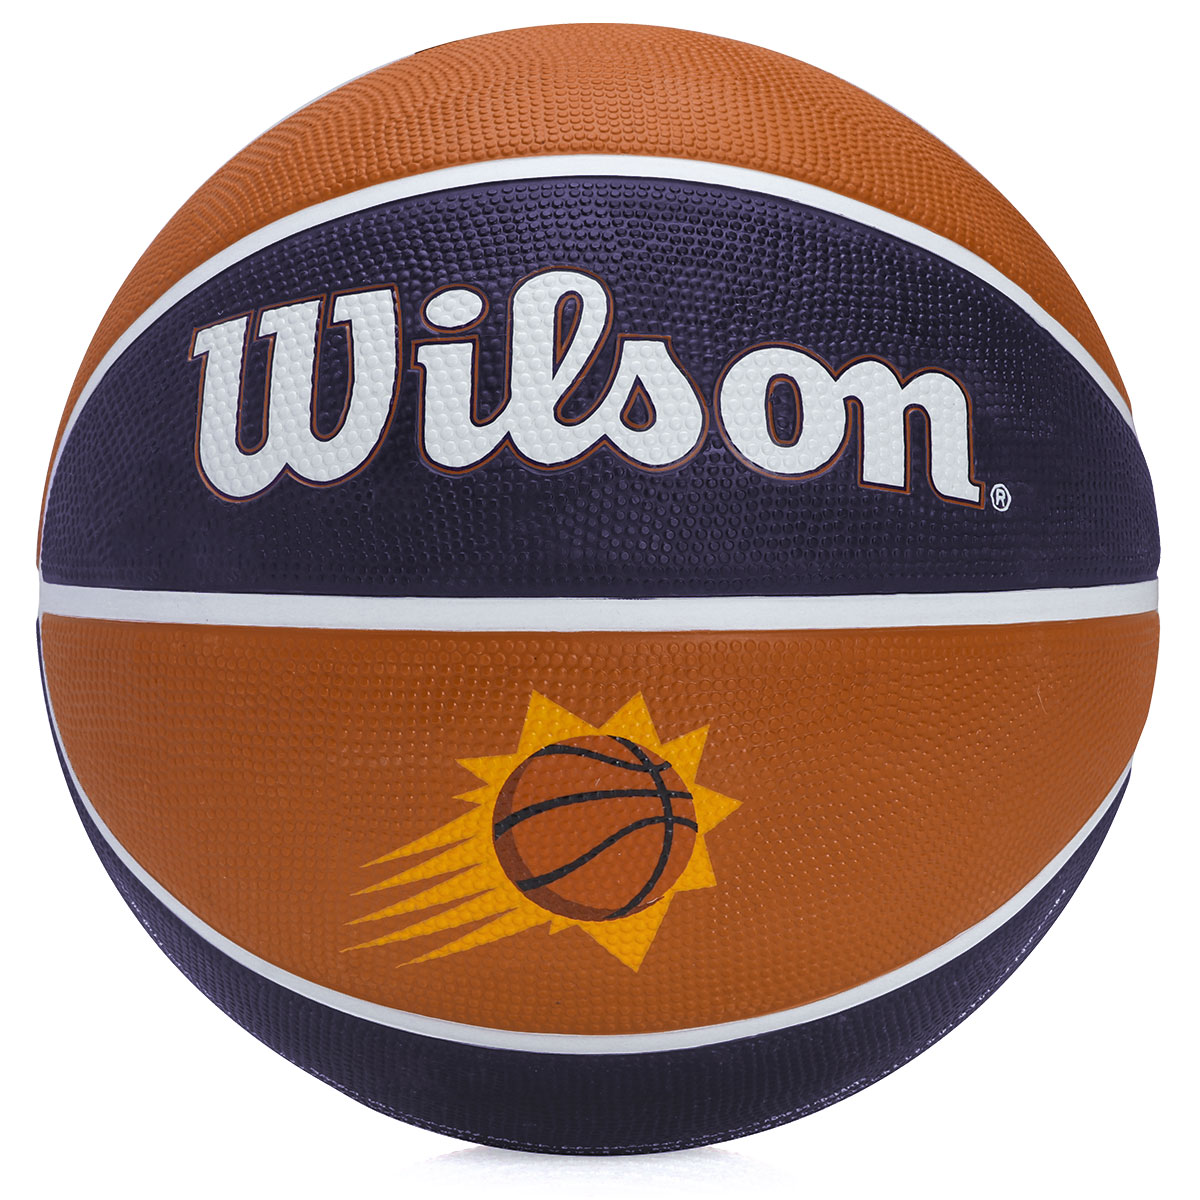 Wilson NBA Mini Bola Basquete WTB1100PDQNB - Marrom/Marrom - Botas